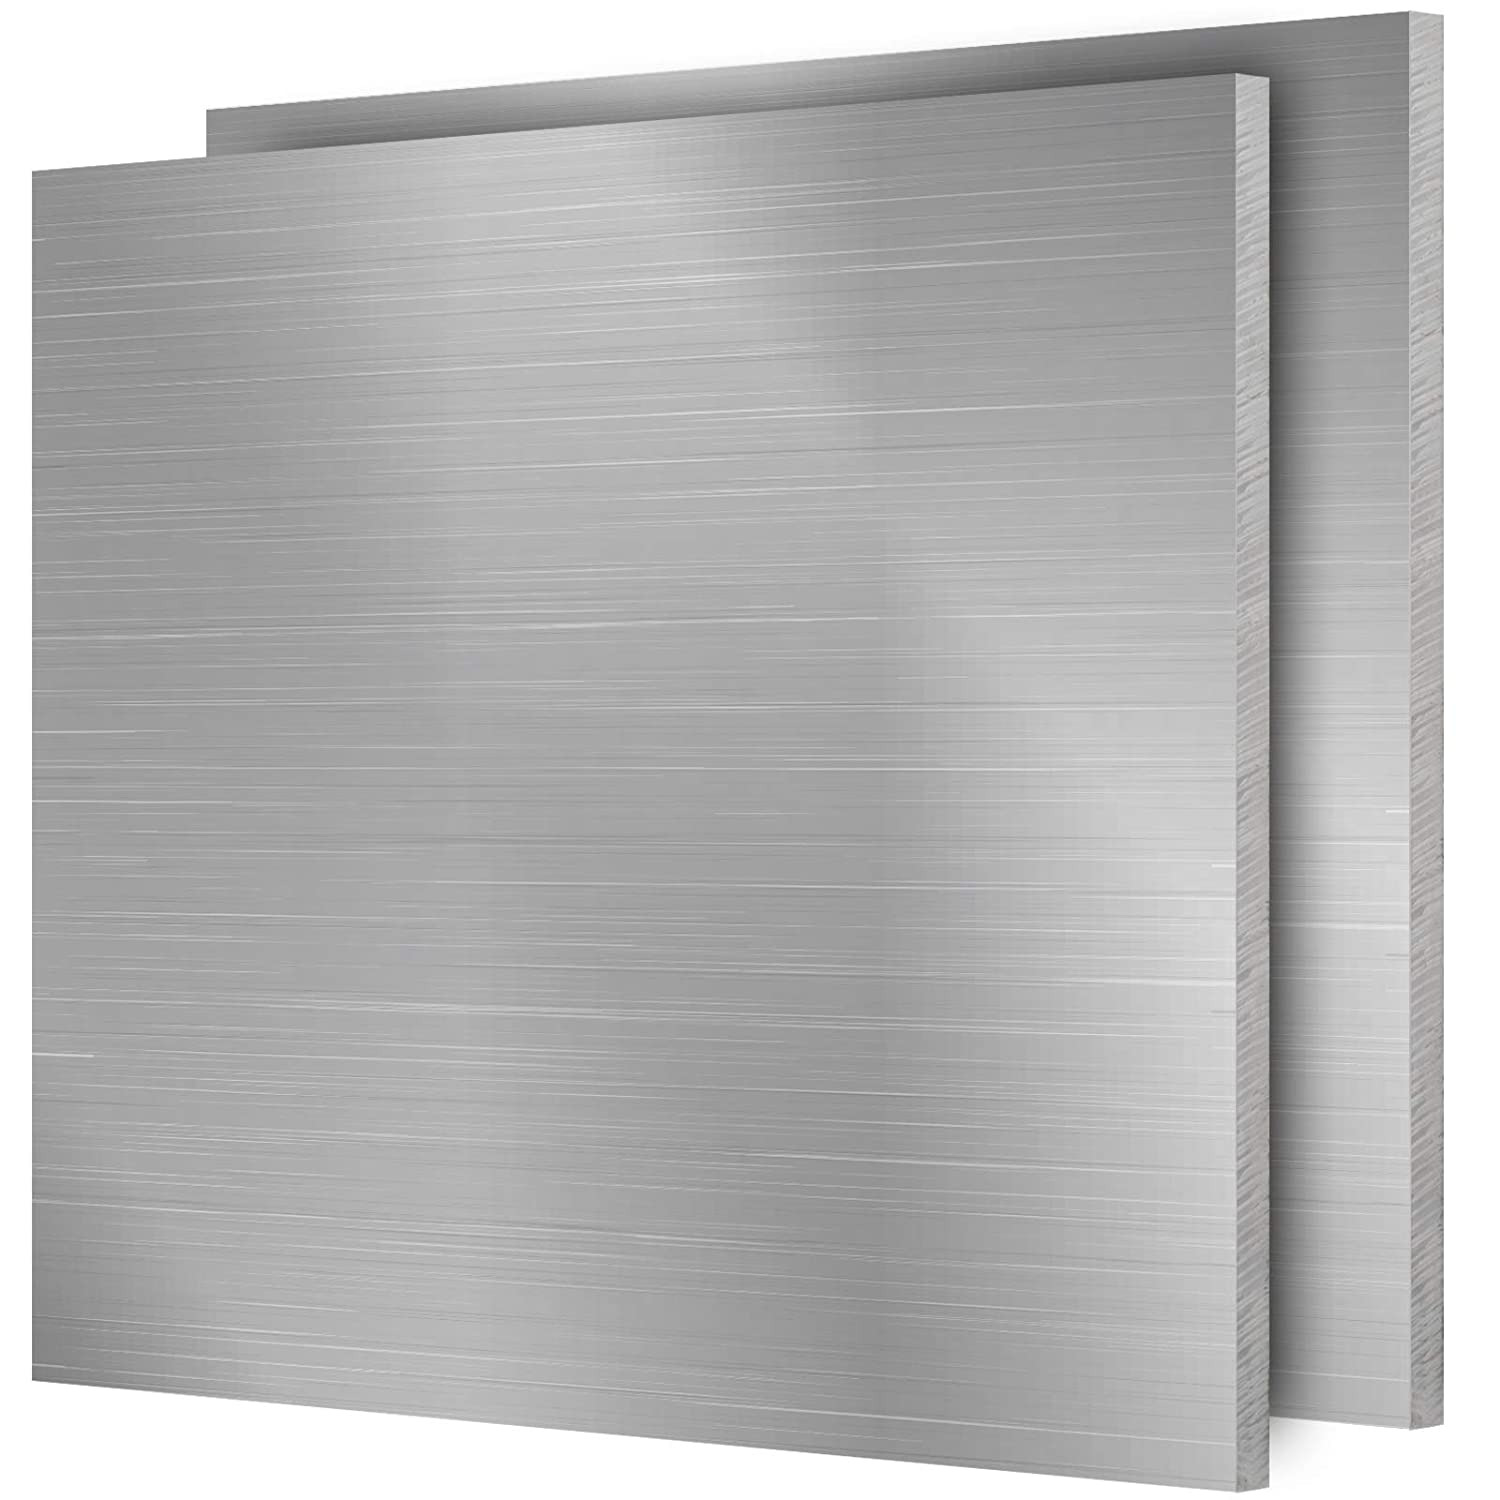 2 Pack 6061 Aluminum Sheet 12 X 12 X 1/4 Inches Sturdy & Durable Aluminum Plate